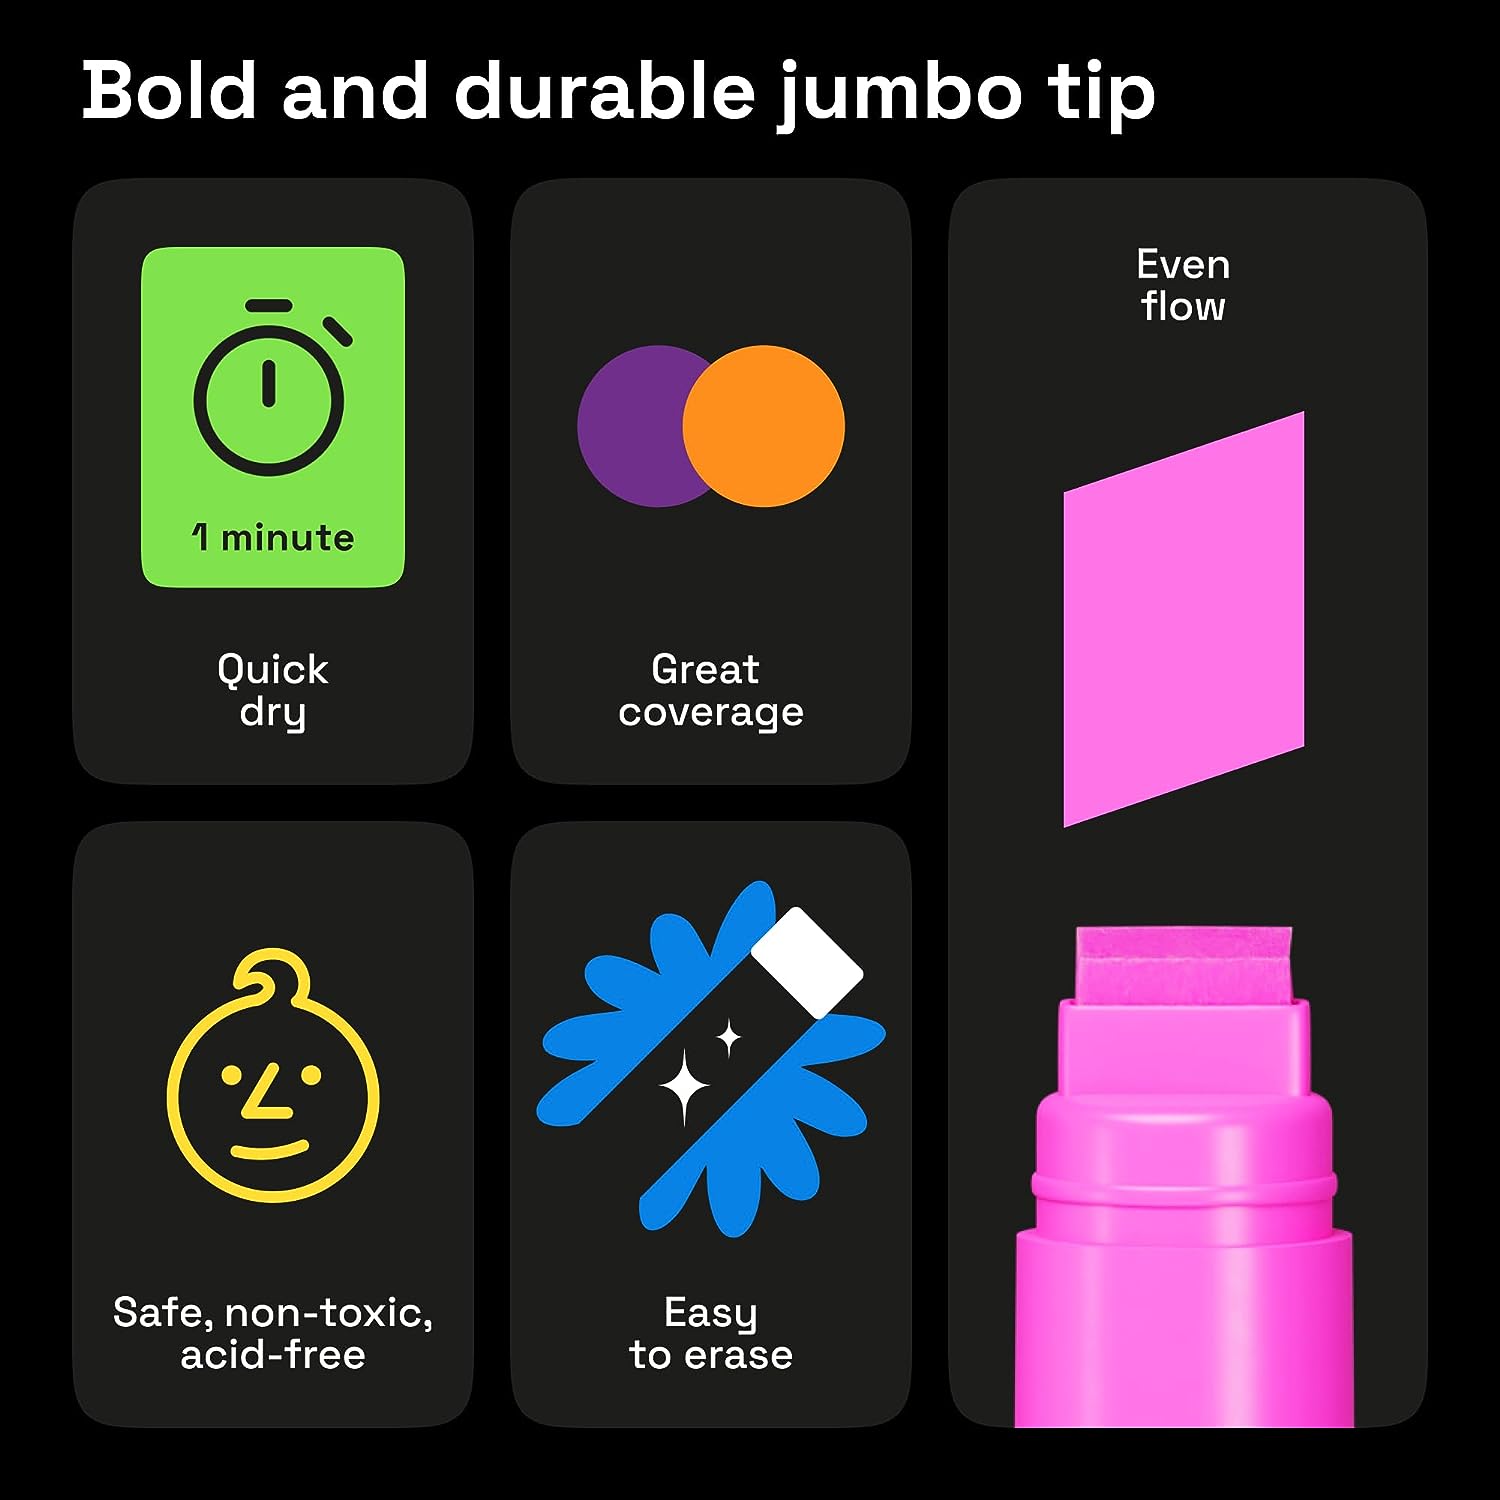 bold and durable jumbo tip